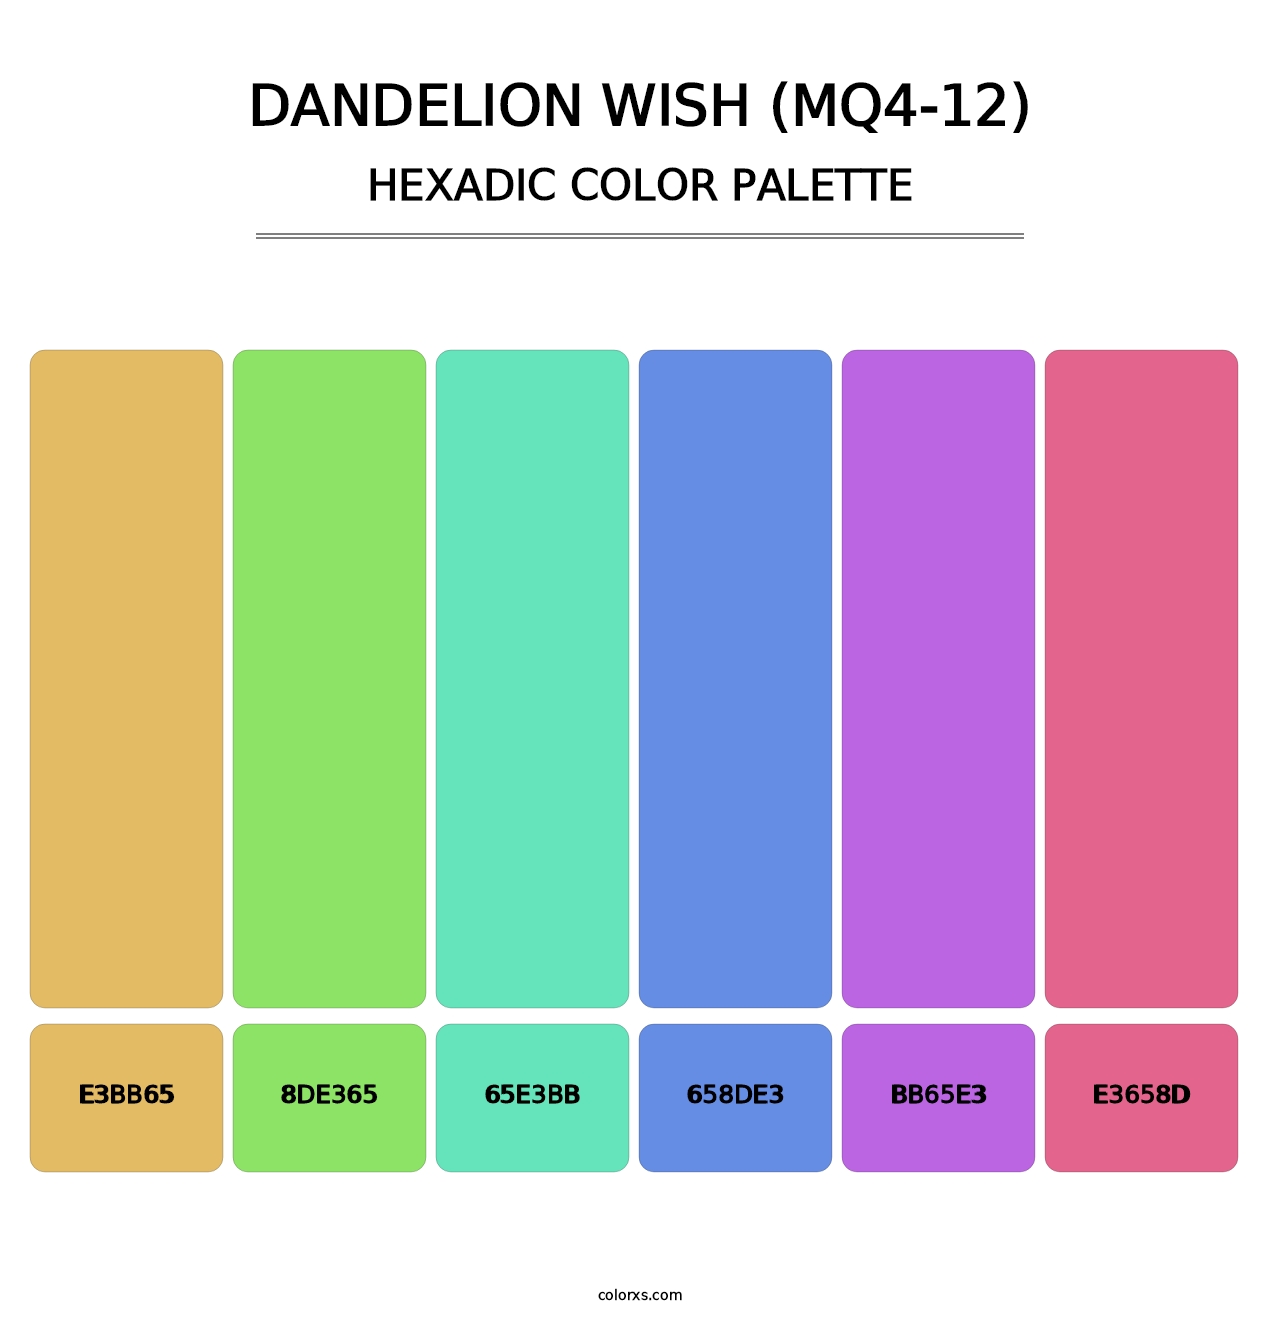 Dandelion Wish (MQ4-12) - Hexadic Color Palette